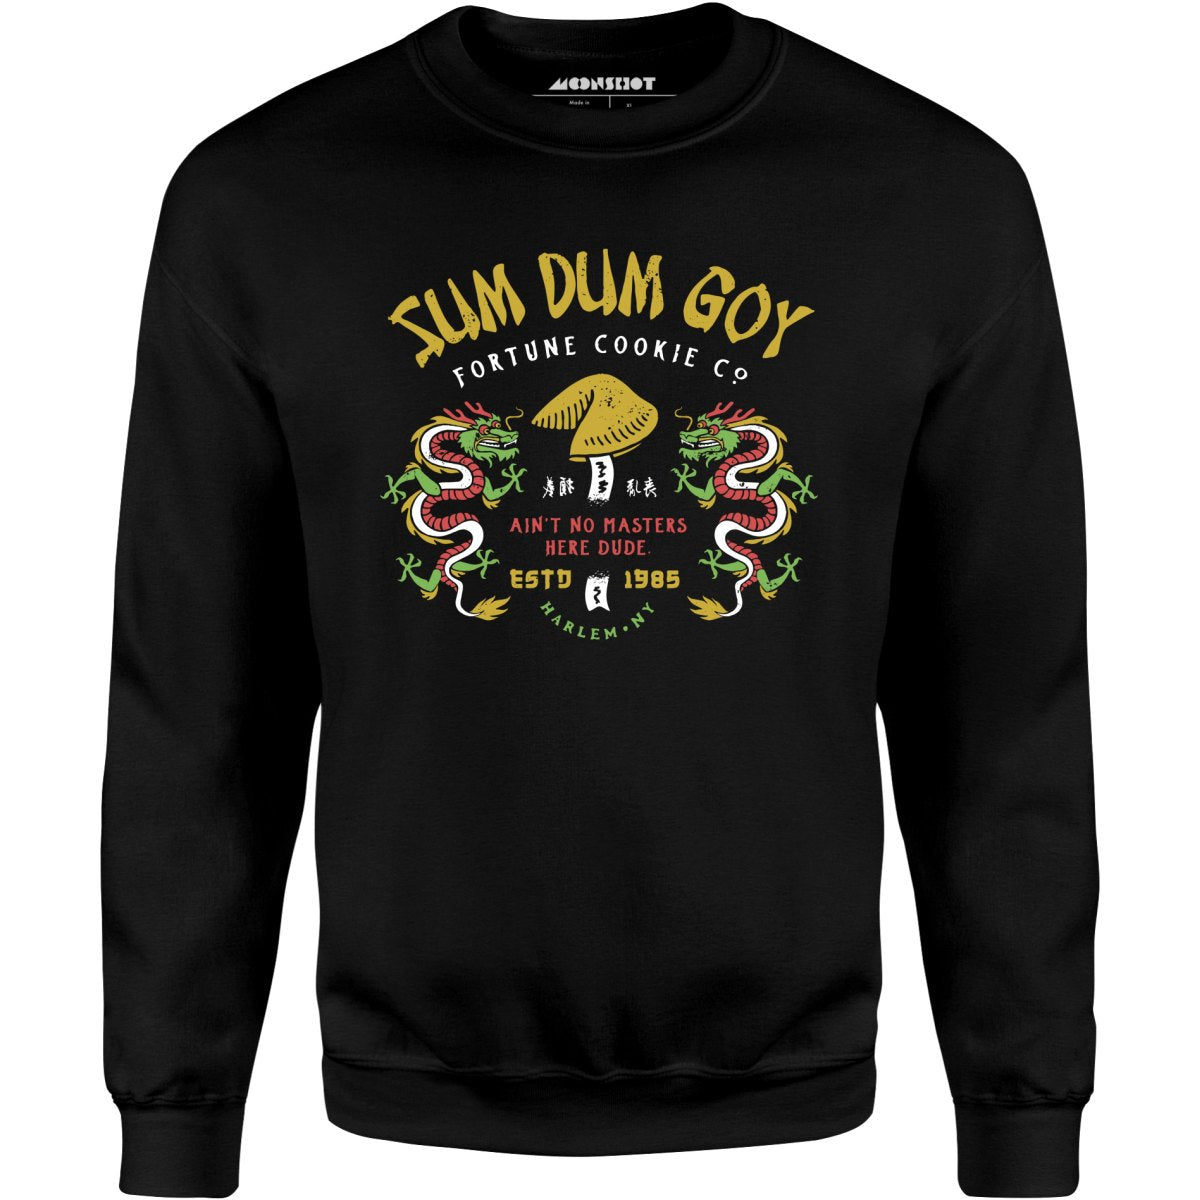 Sum Dum Goy Fortune Cookie Co. - Last Dragon - Unisex Sweatshirt